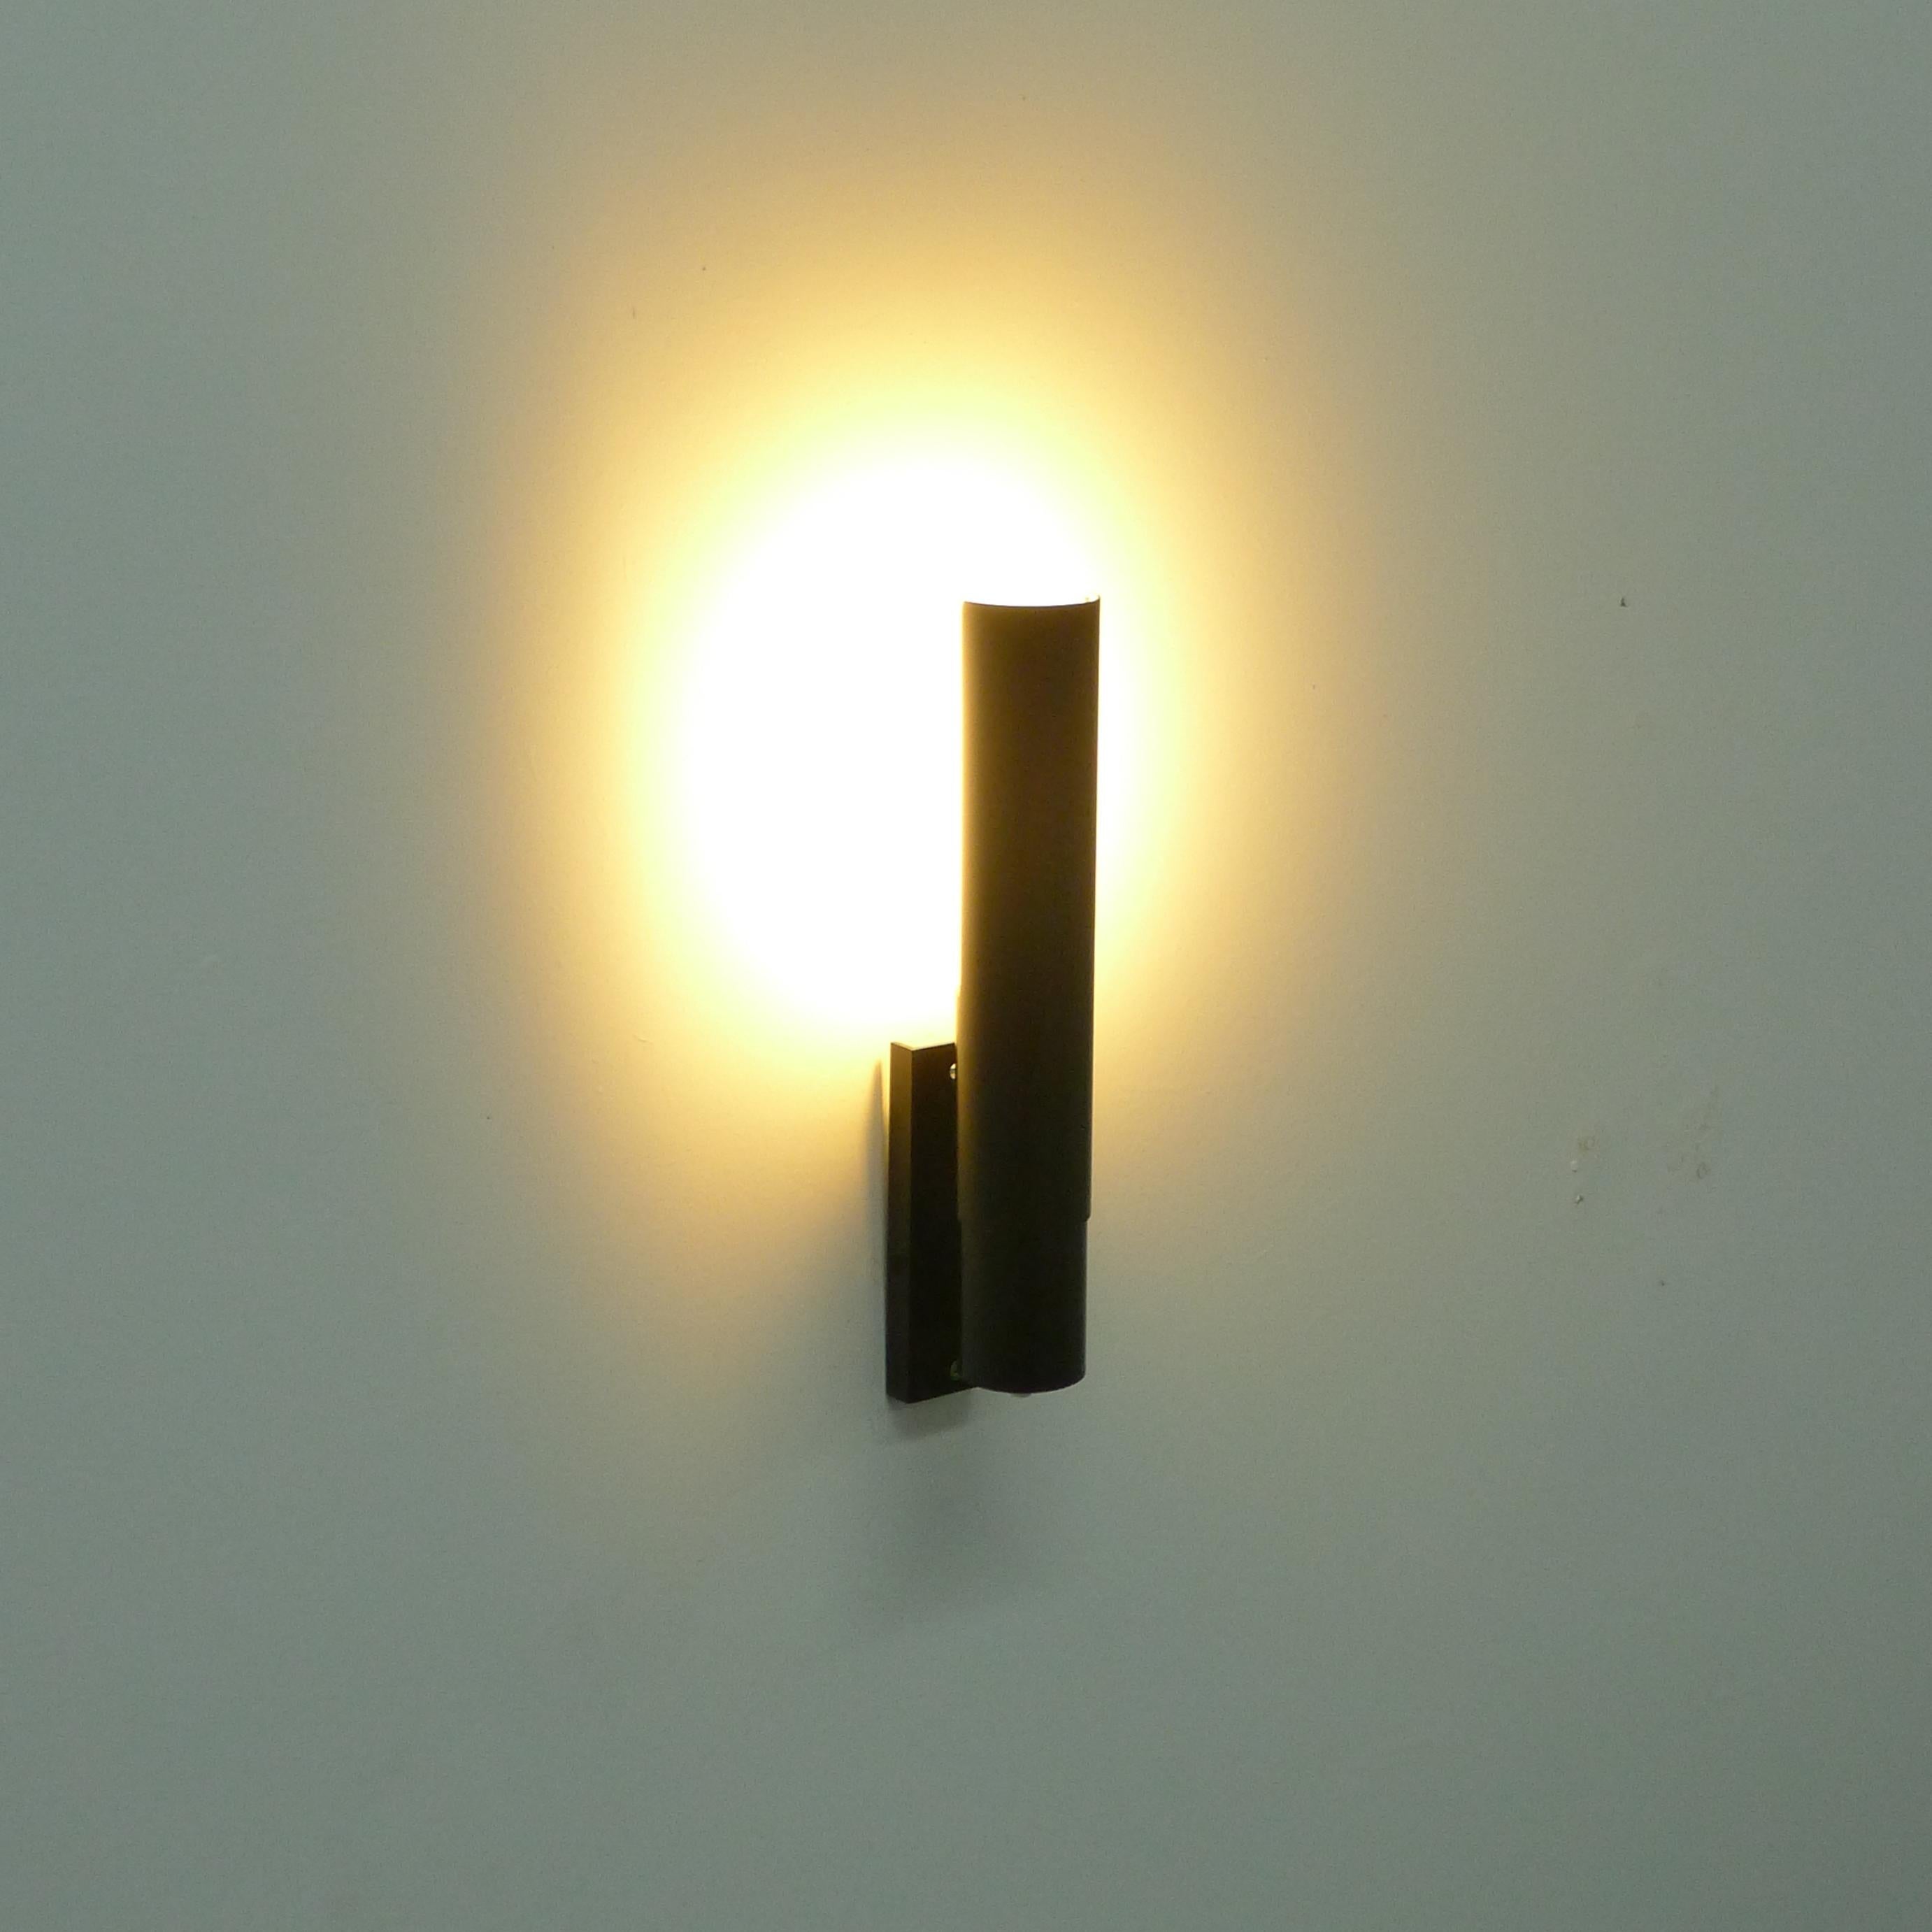 Mid-Century Modern Gino Sarfatti, Wall Light, model 211, designed 1955, made by Arteluce 1950s For Sale